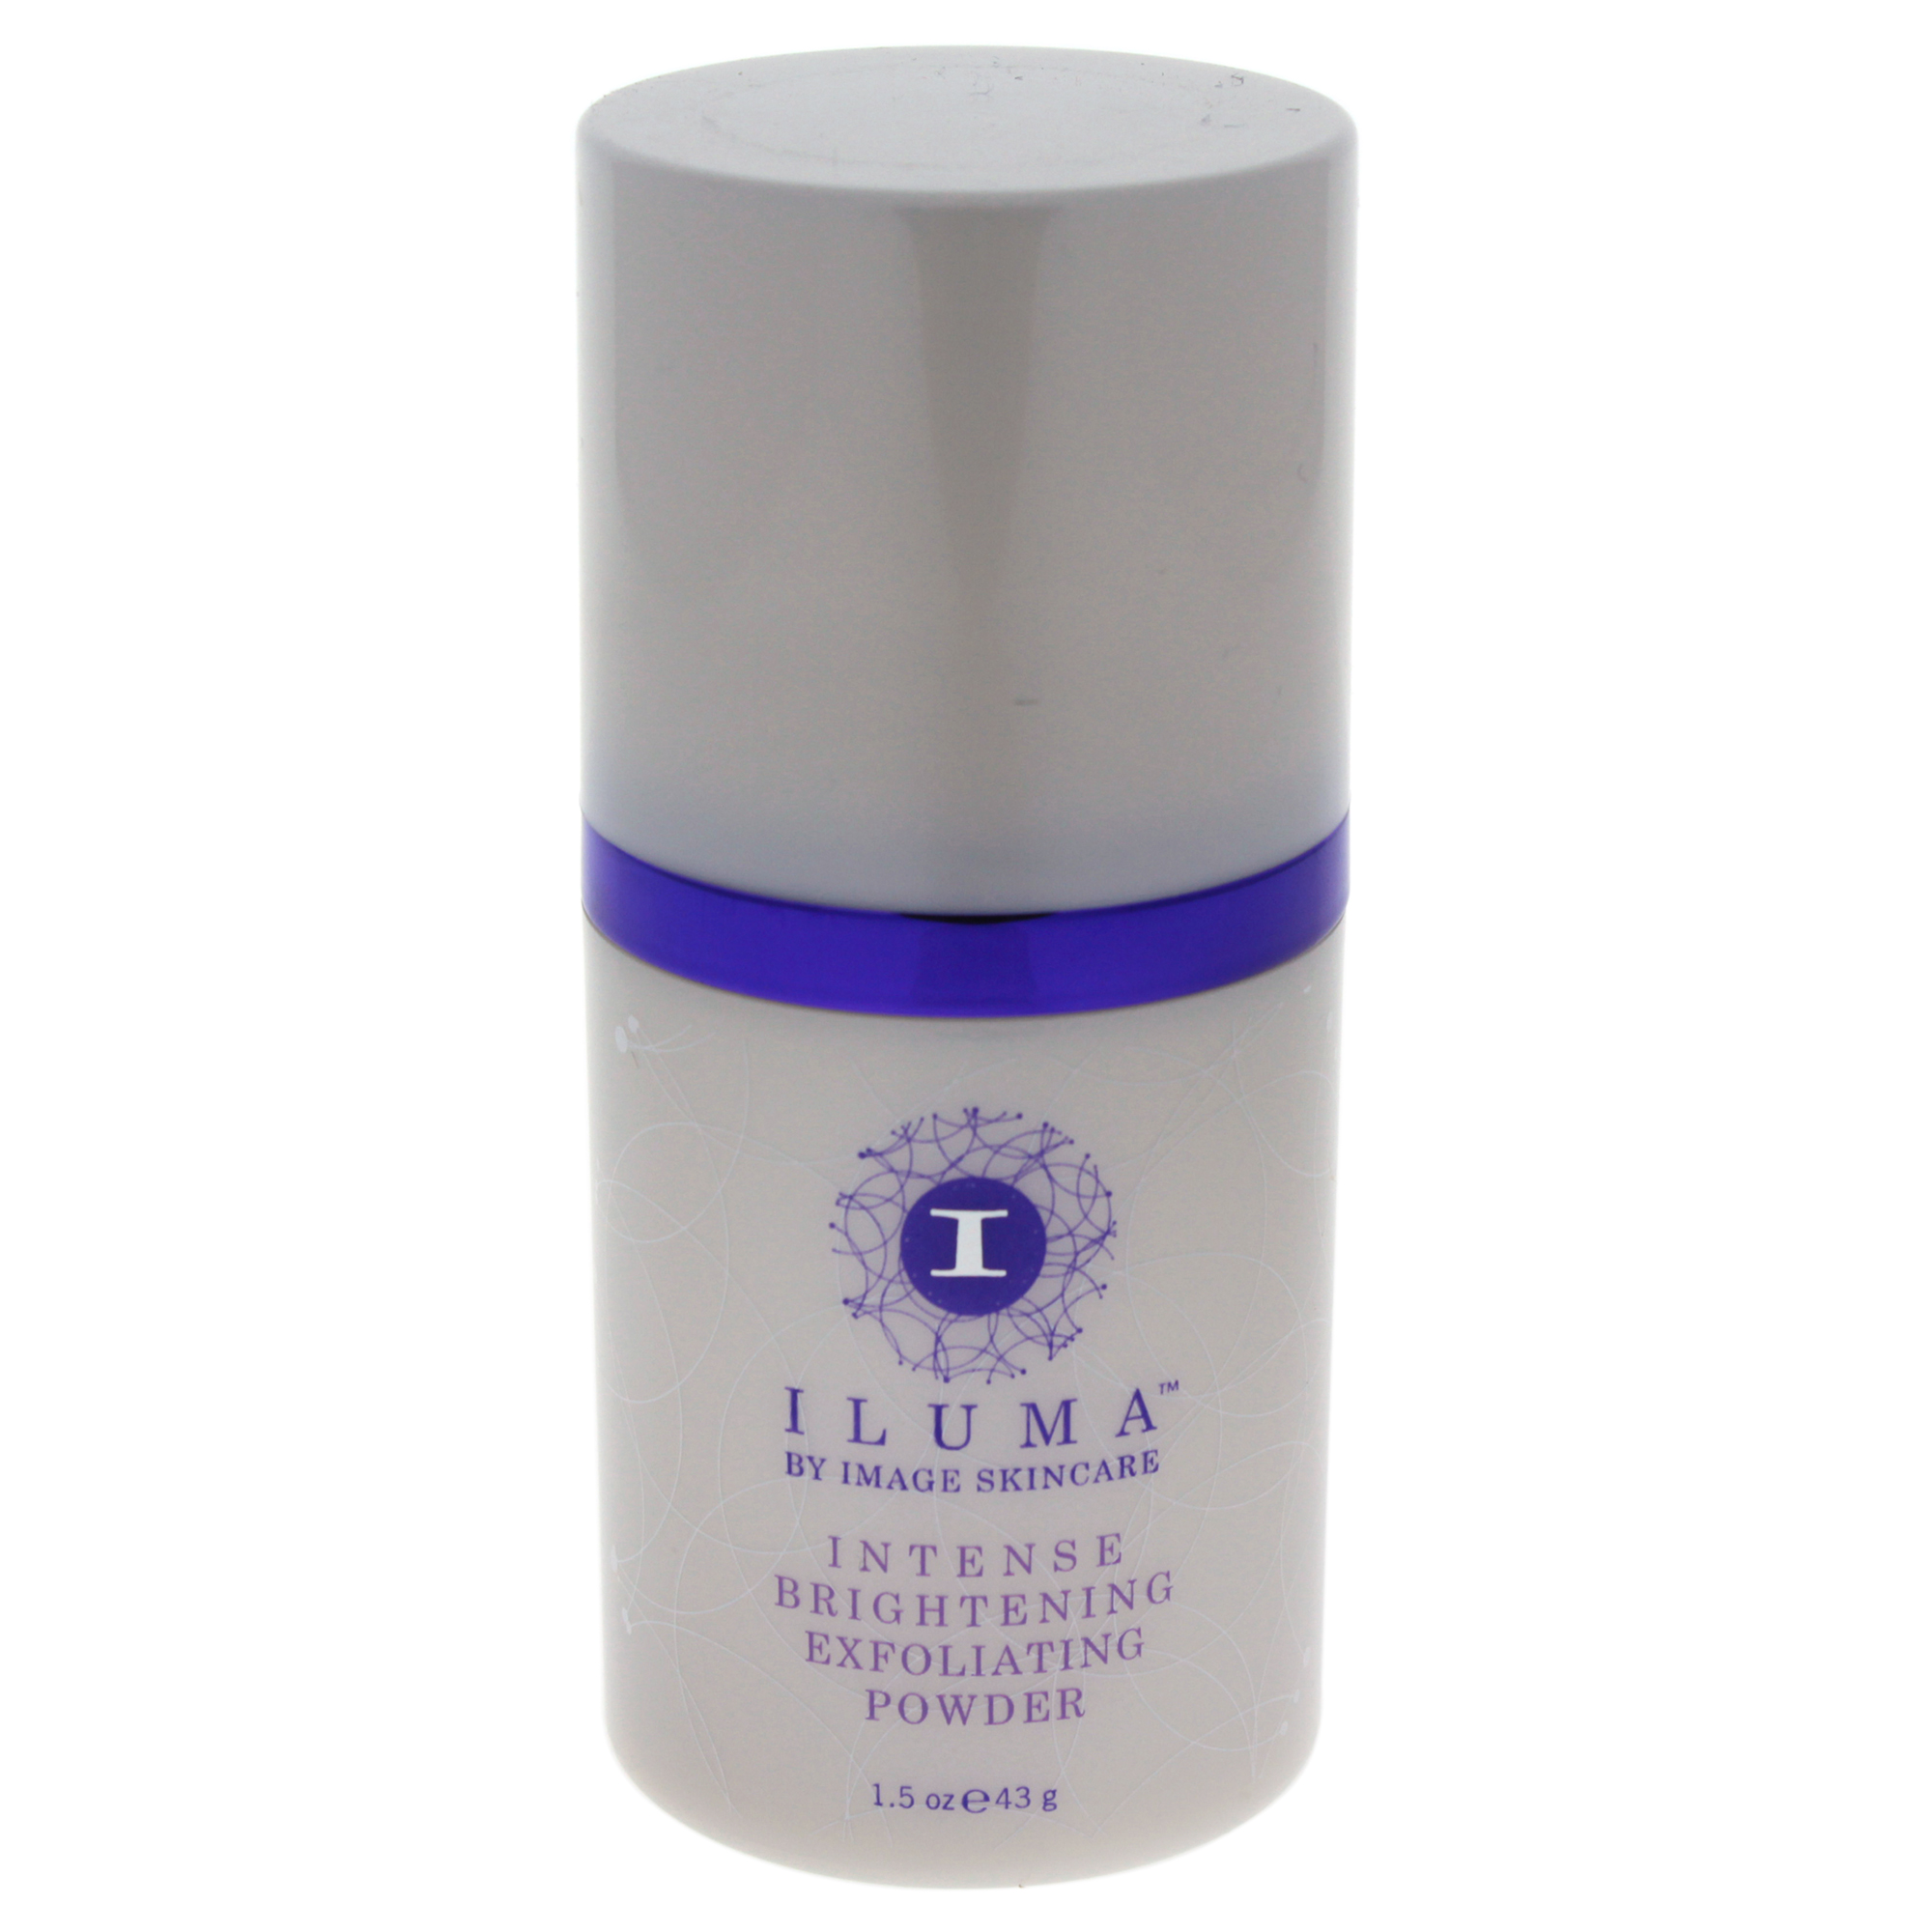 IMAGE Skincare ILUMA Intense Brightening Exfoliating Powder 1.5 oz. - image 1 of 2